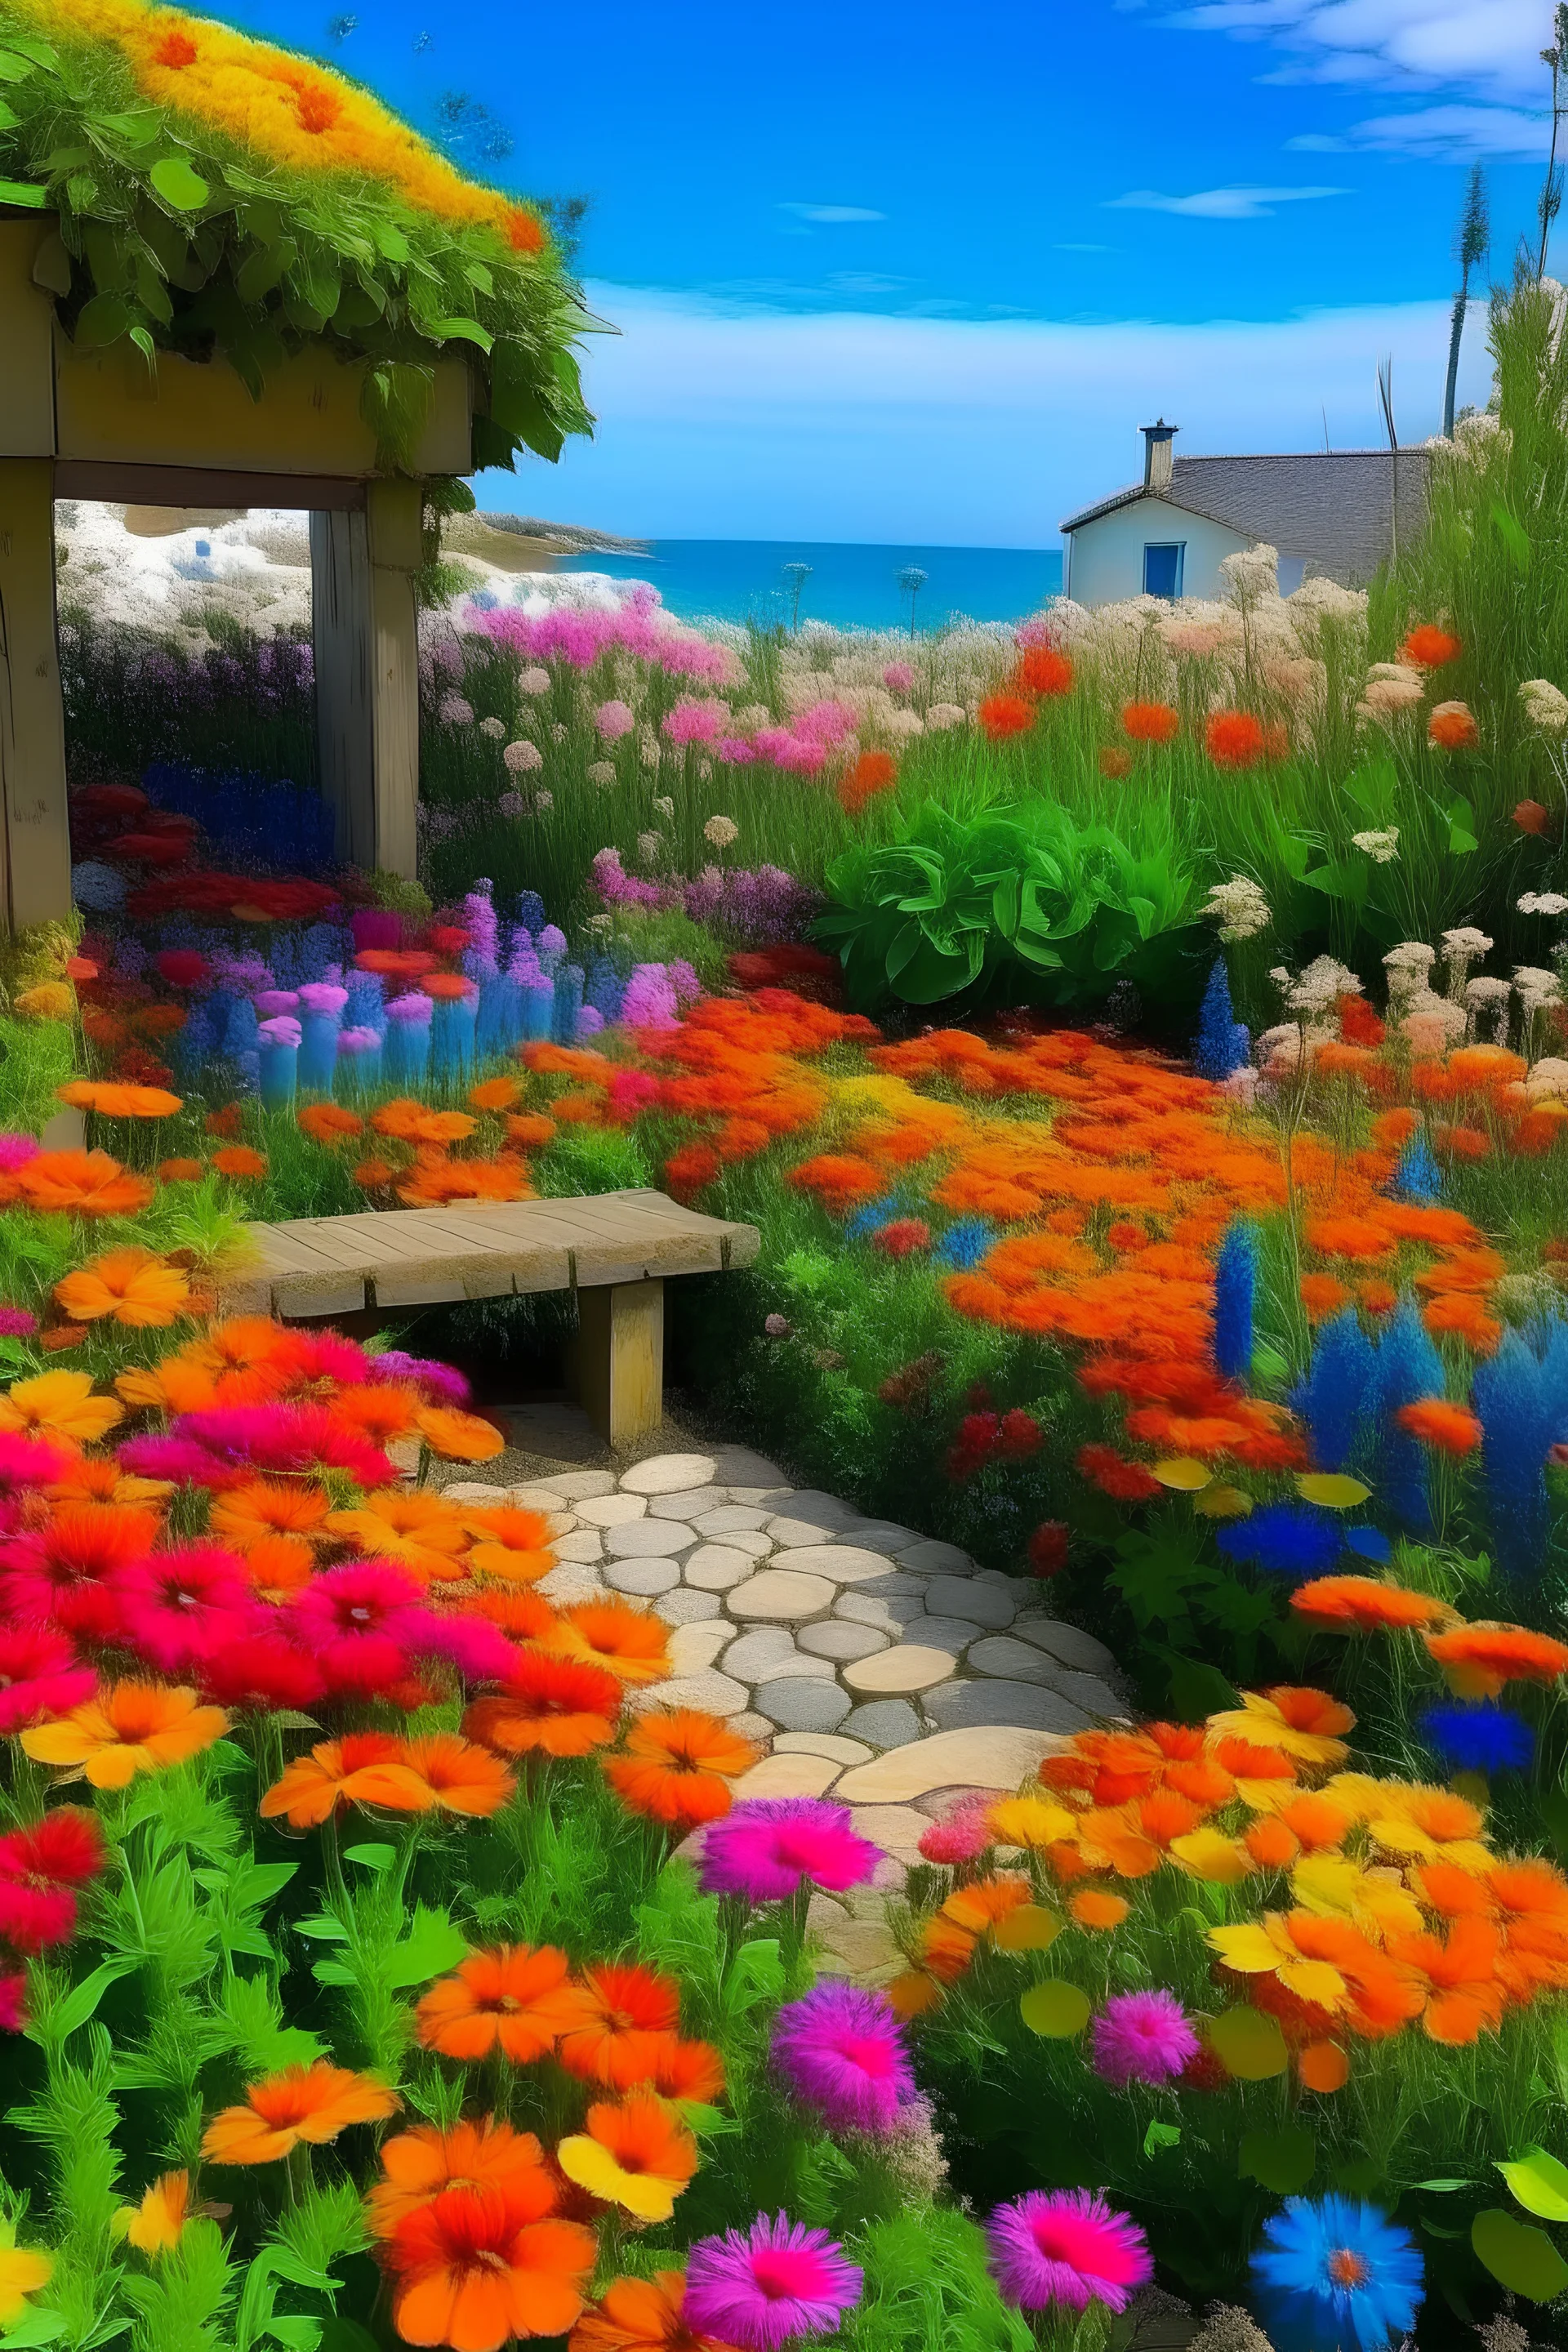 Un lugar cálido, rodeado de flores con bello aroma, cerca de la playa, que transmita mucha paz